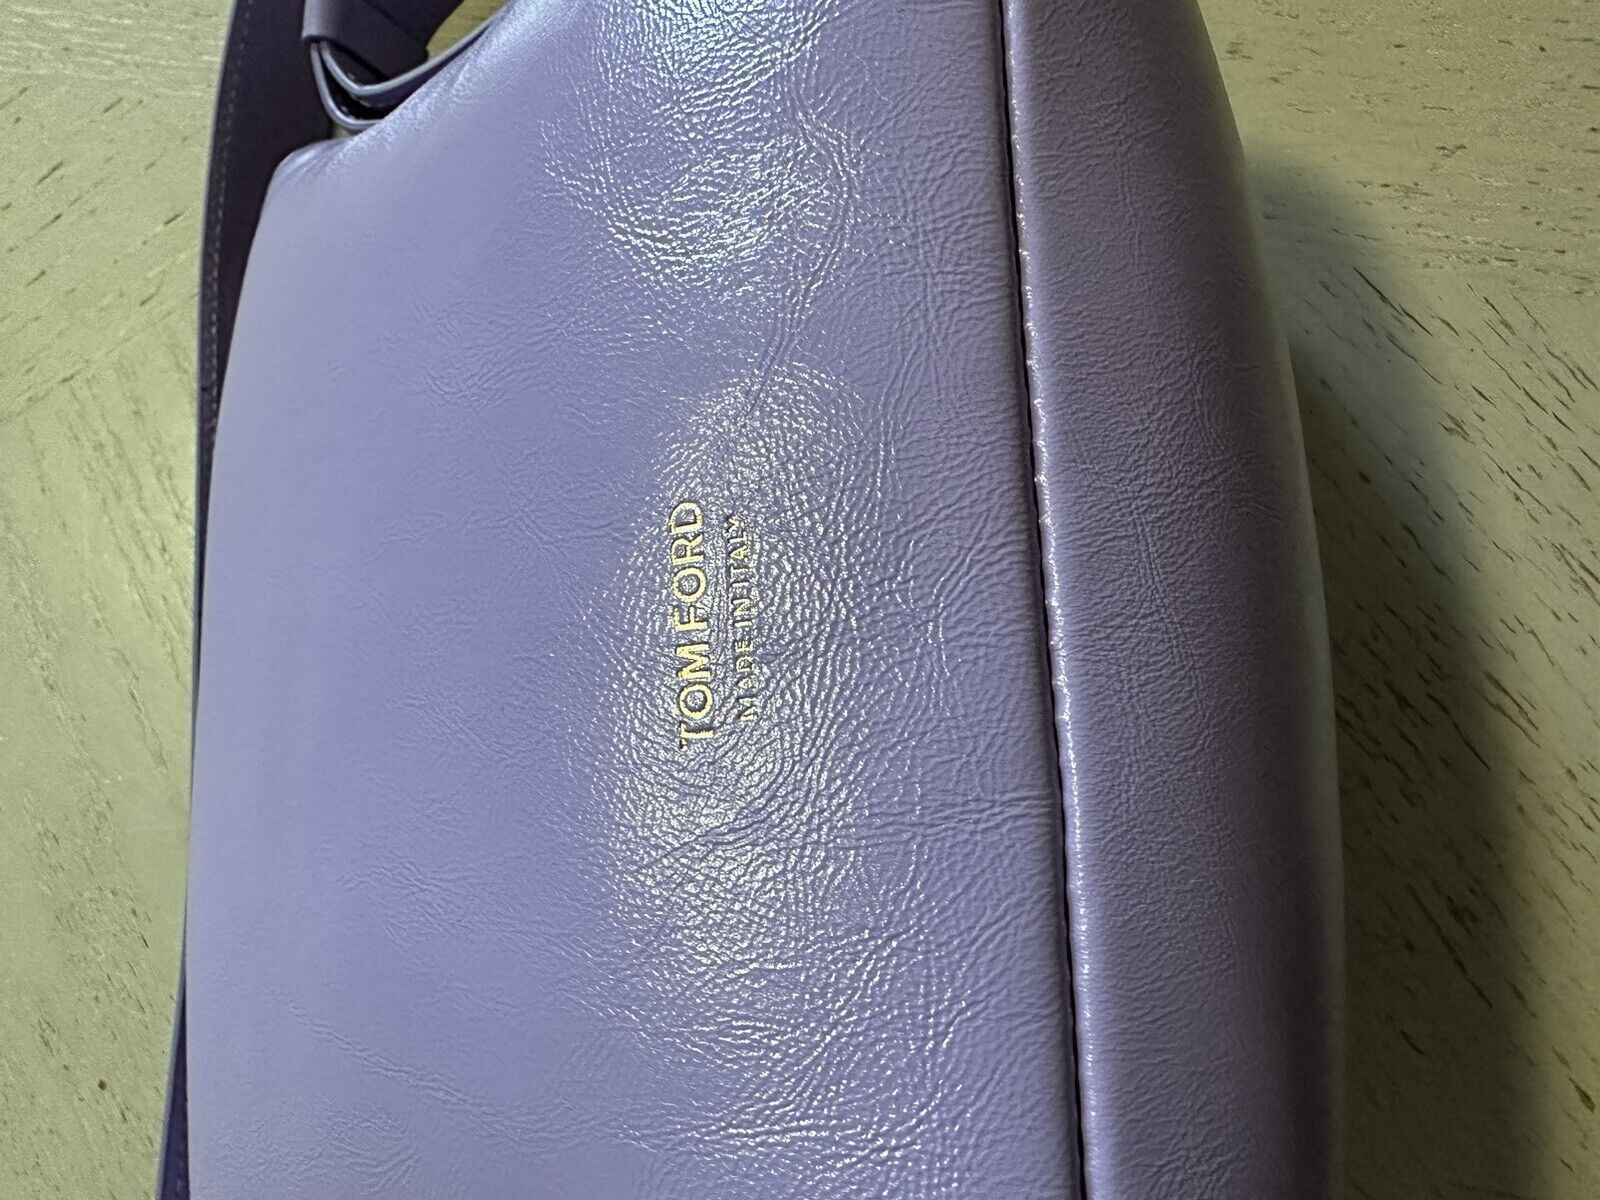 New $1990 TOM FORD Small TF Leather Hobo Bag Color Hyacinth